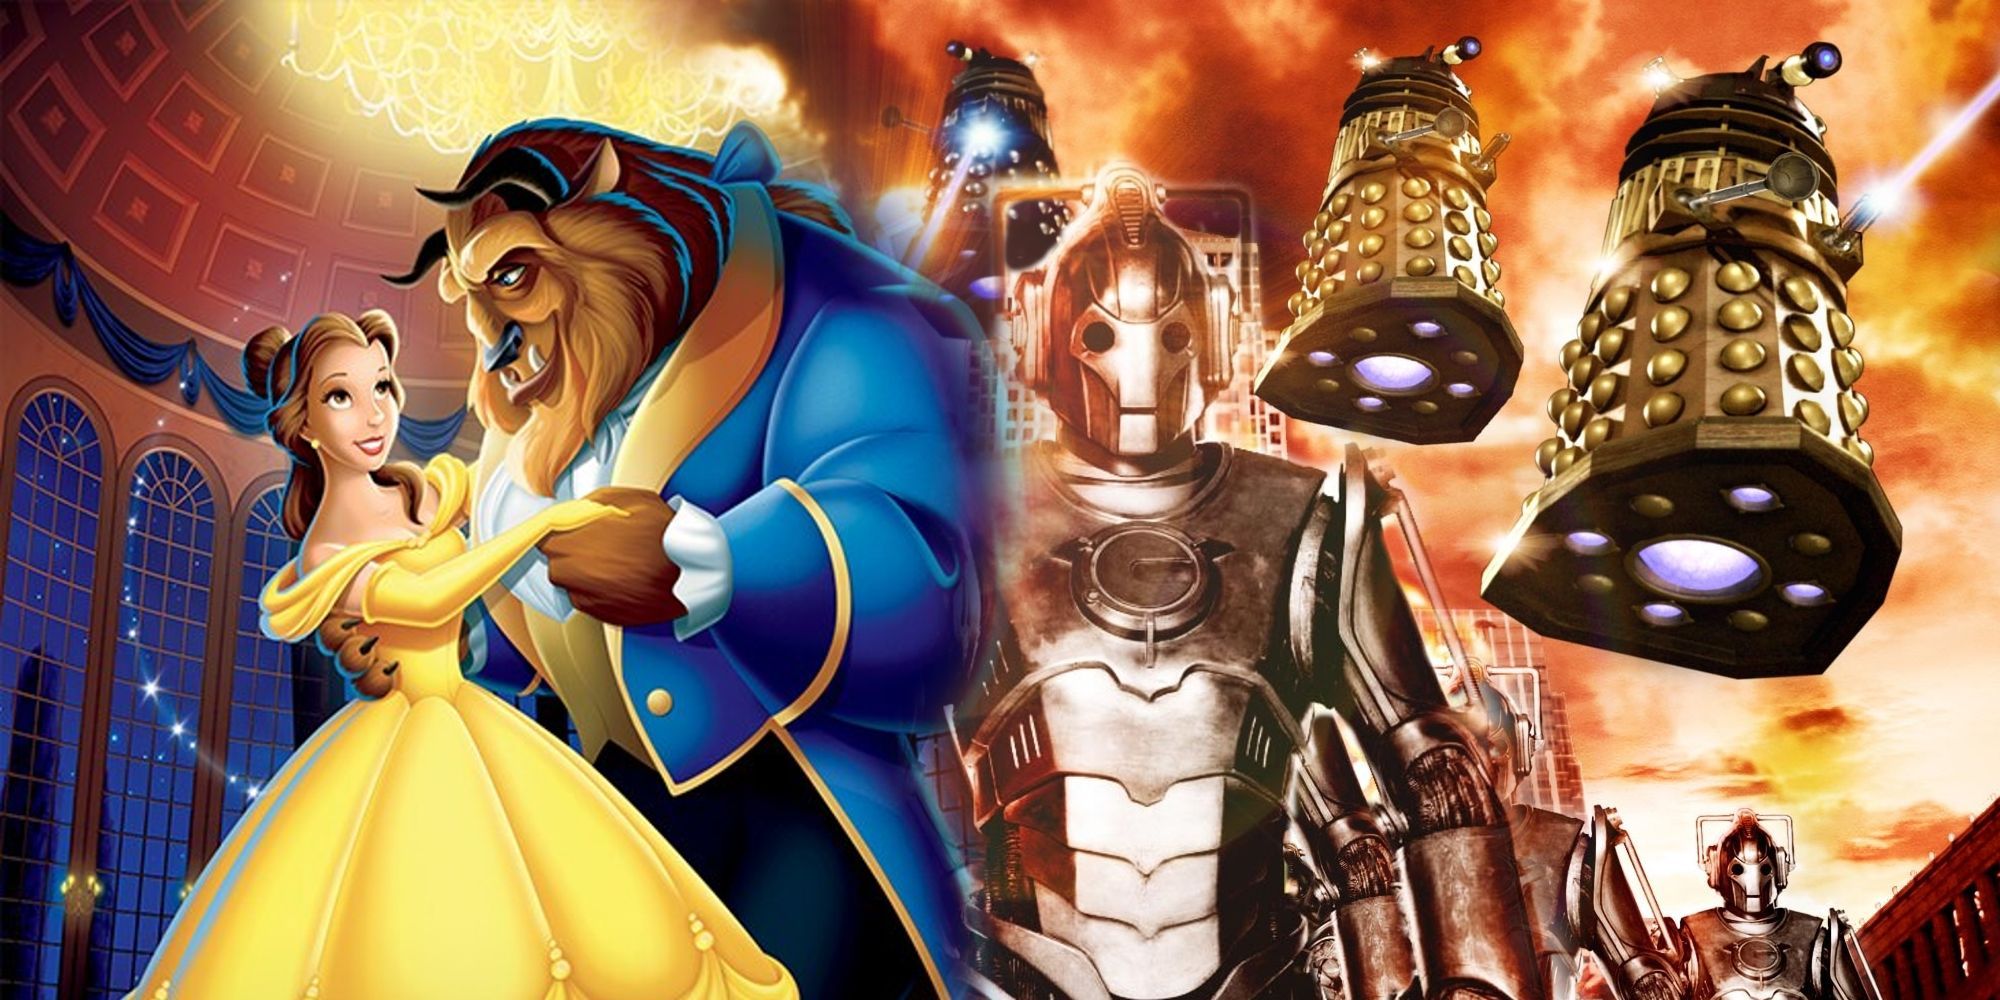 “Tale As Old As Timelords”: Clásico de Disney reinventado con villanos de Doctor Who en cosplay cruzado